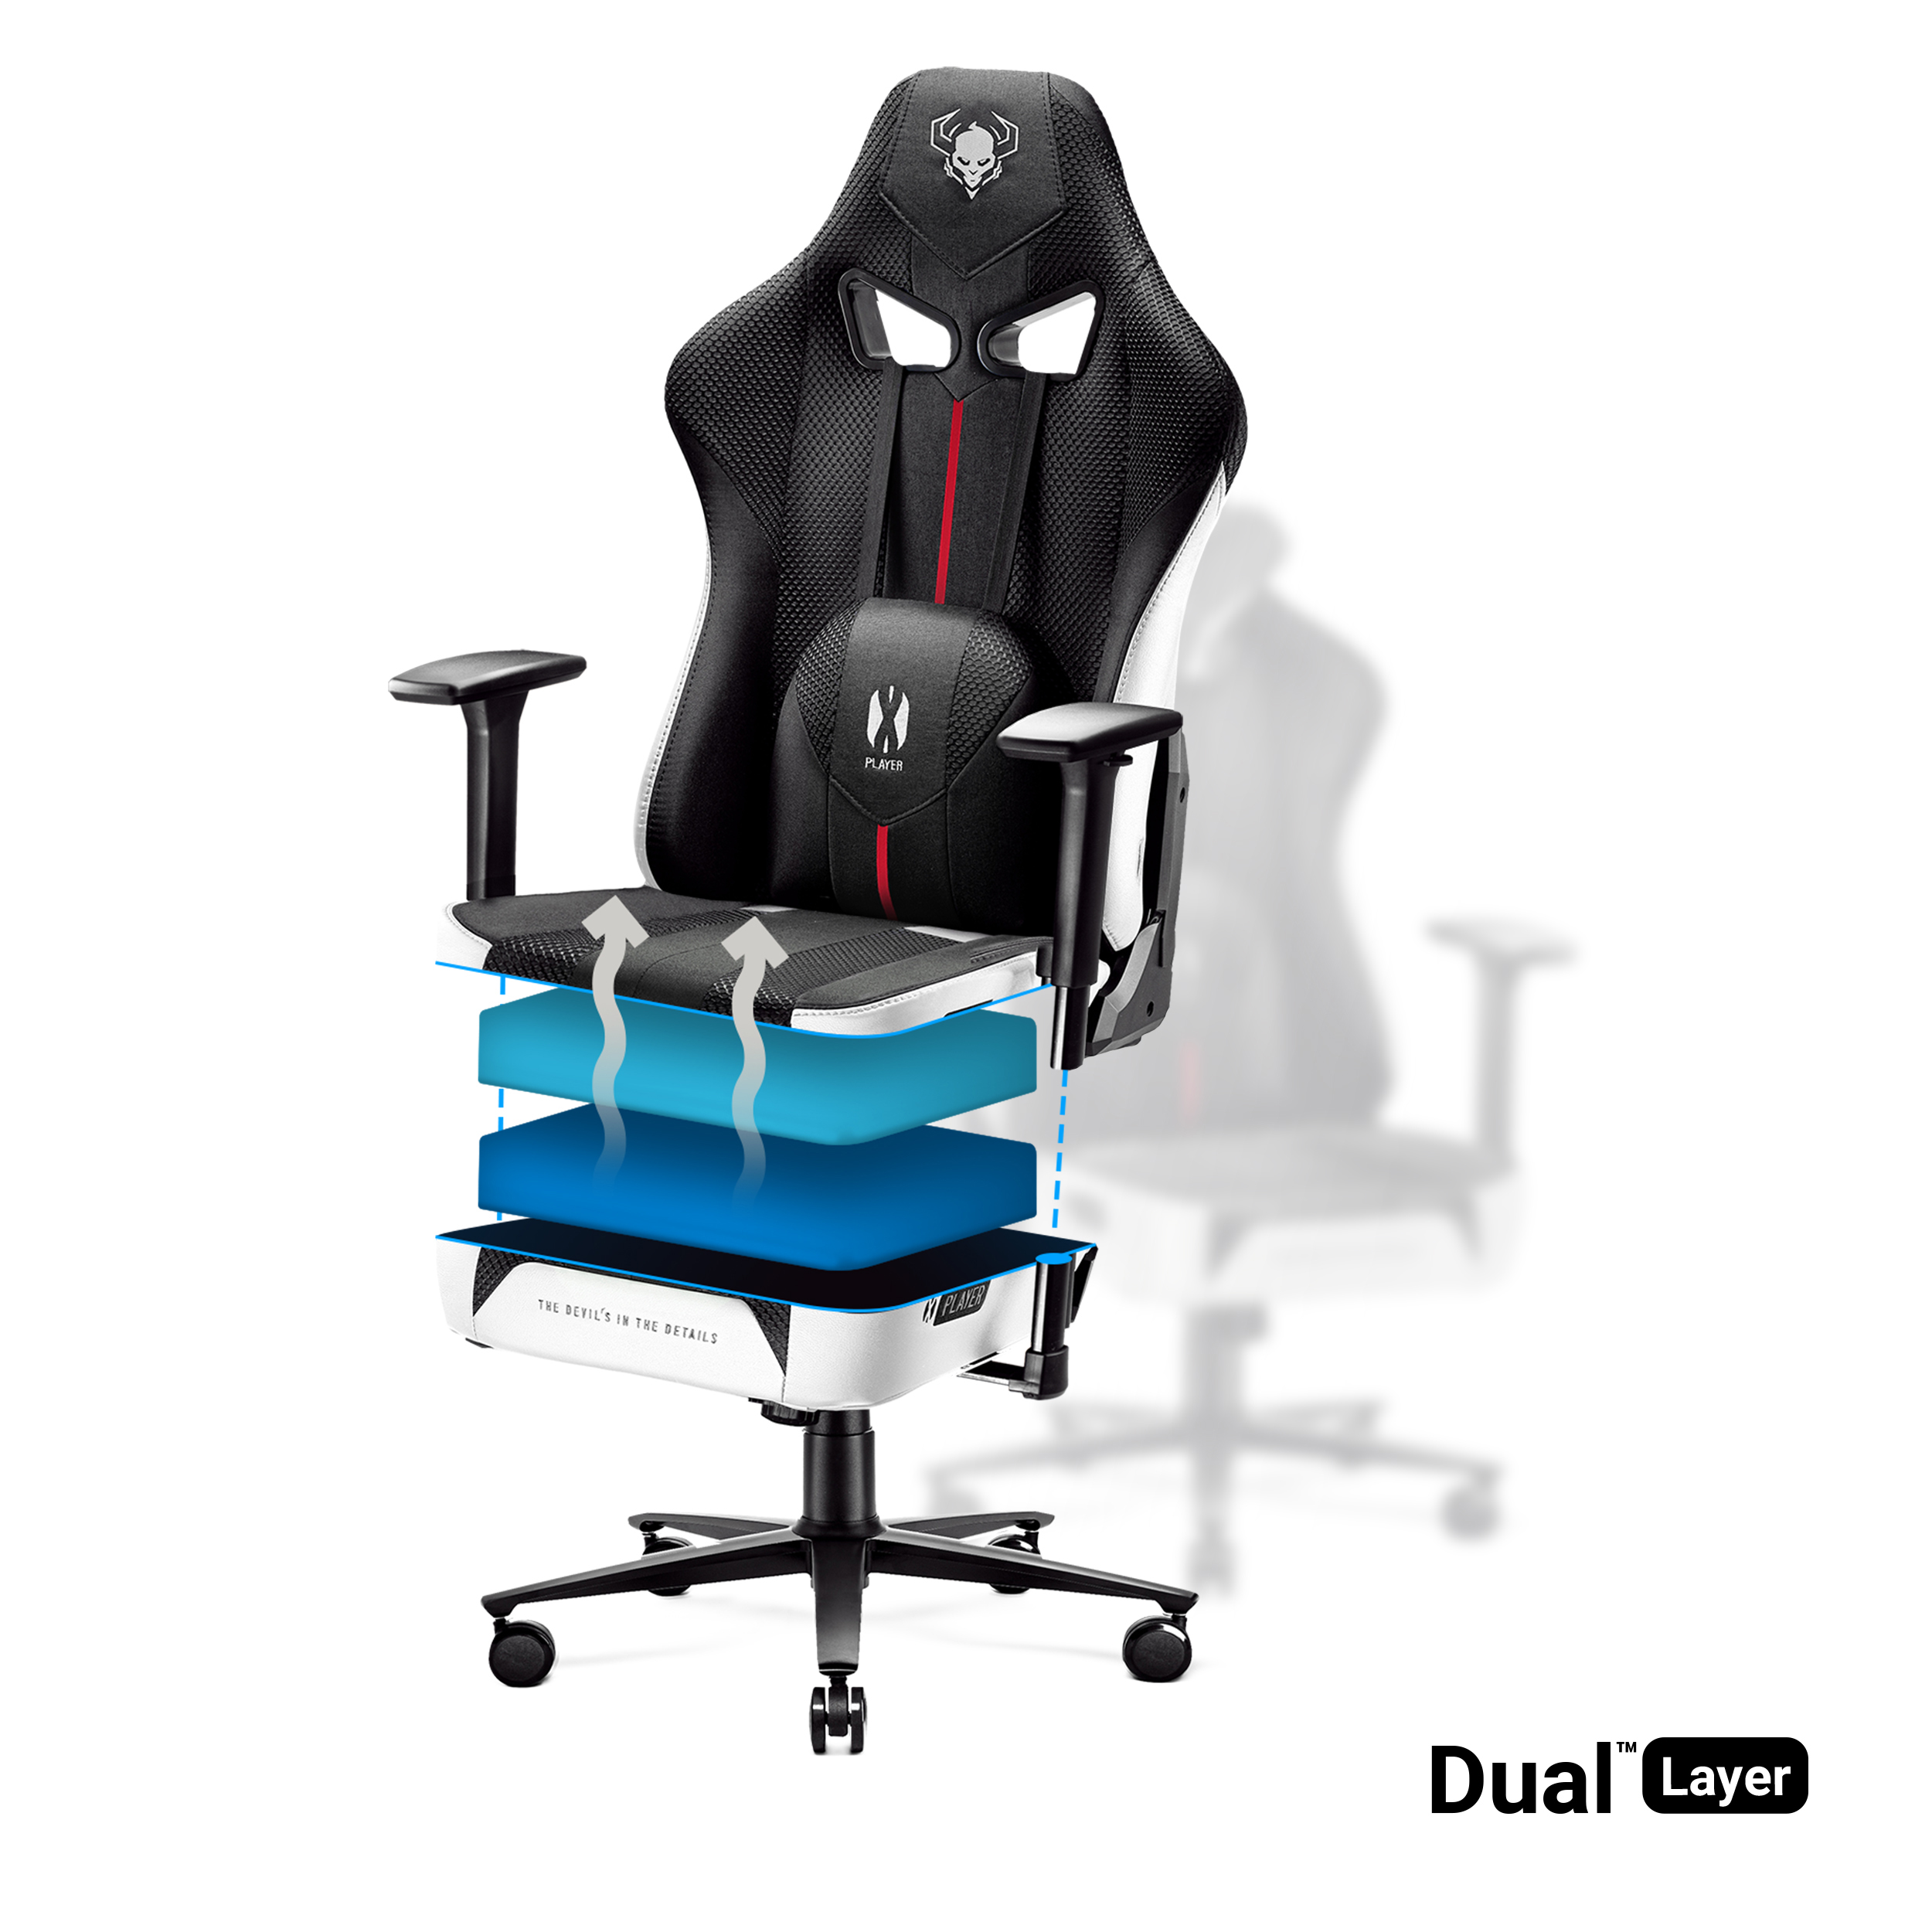 2.0 GAMING Chair, CHAIRS DIABLO black/white KIDS Gaming STUHL X-PLAYER